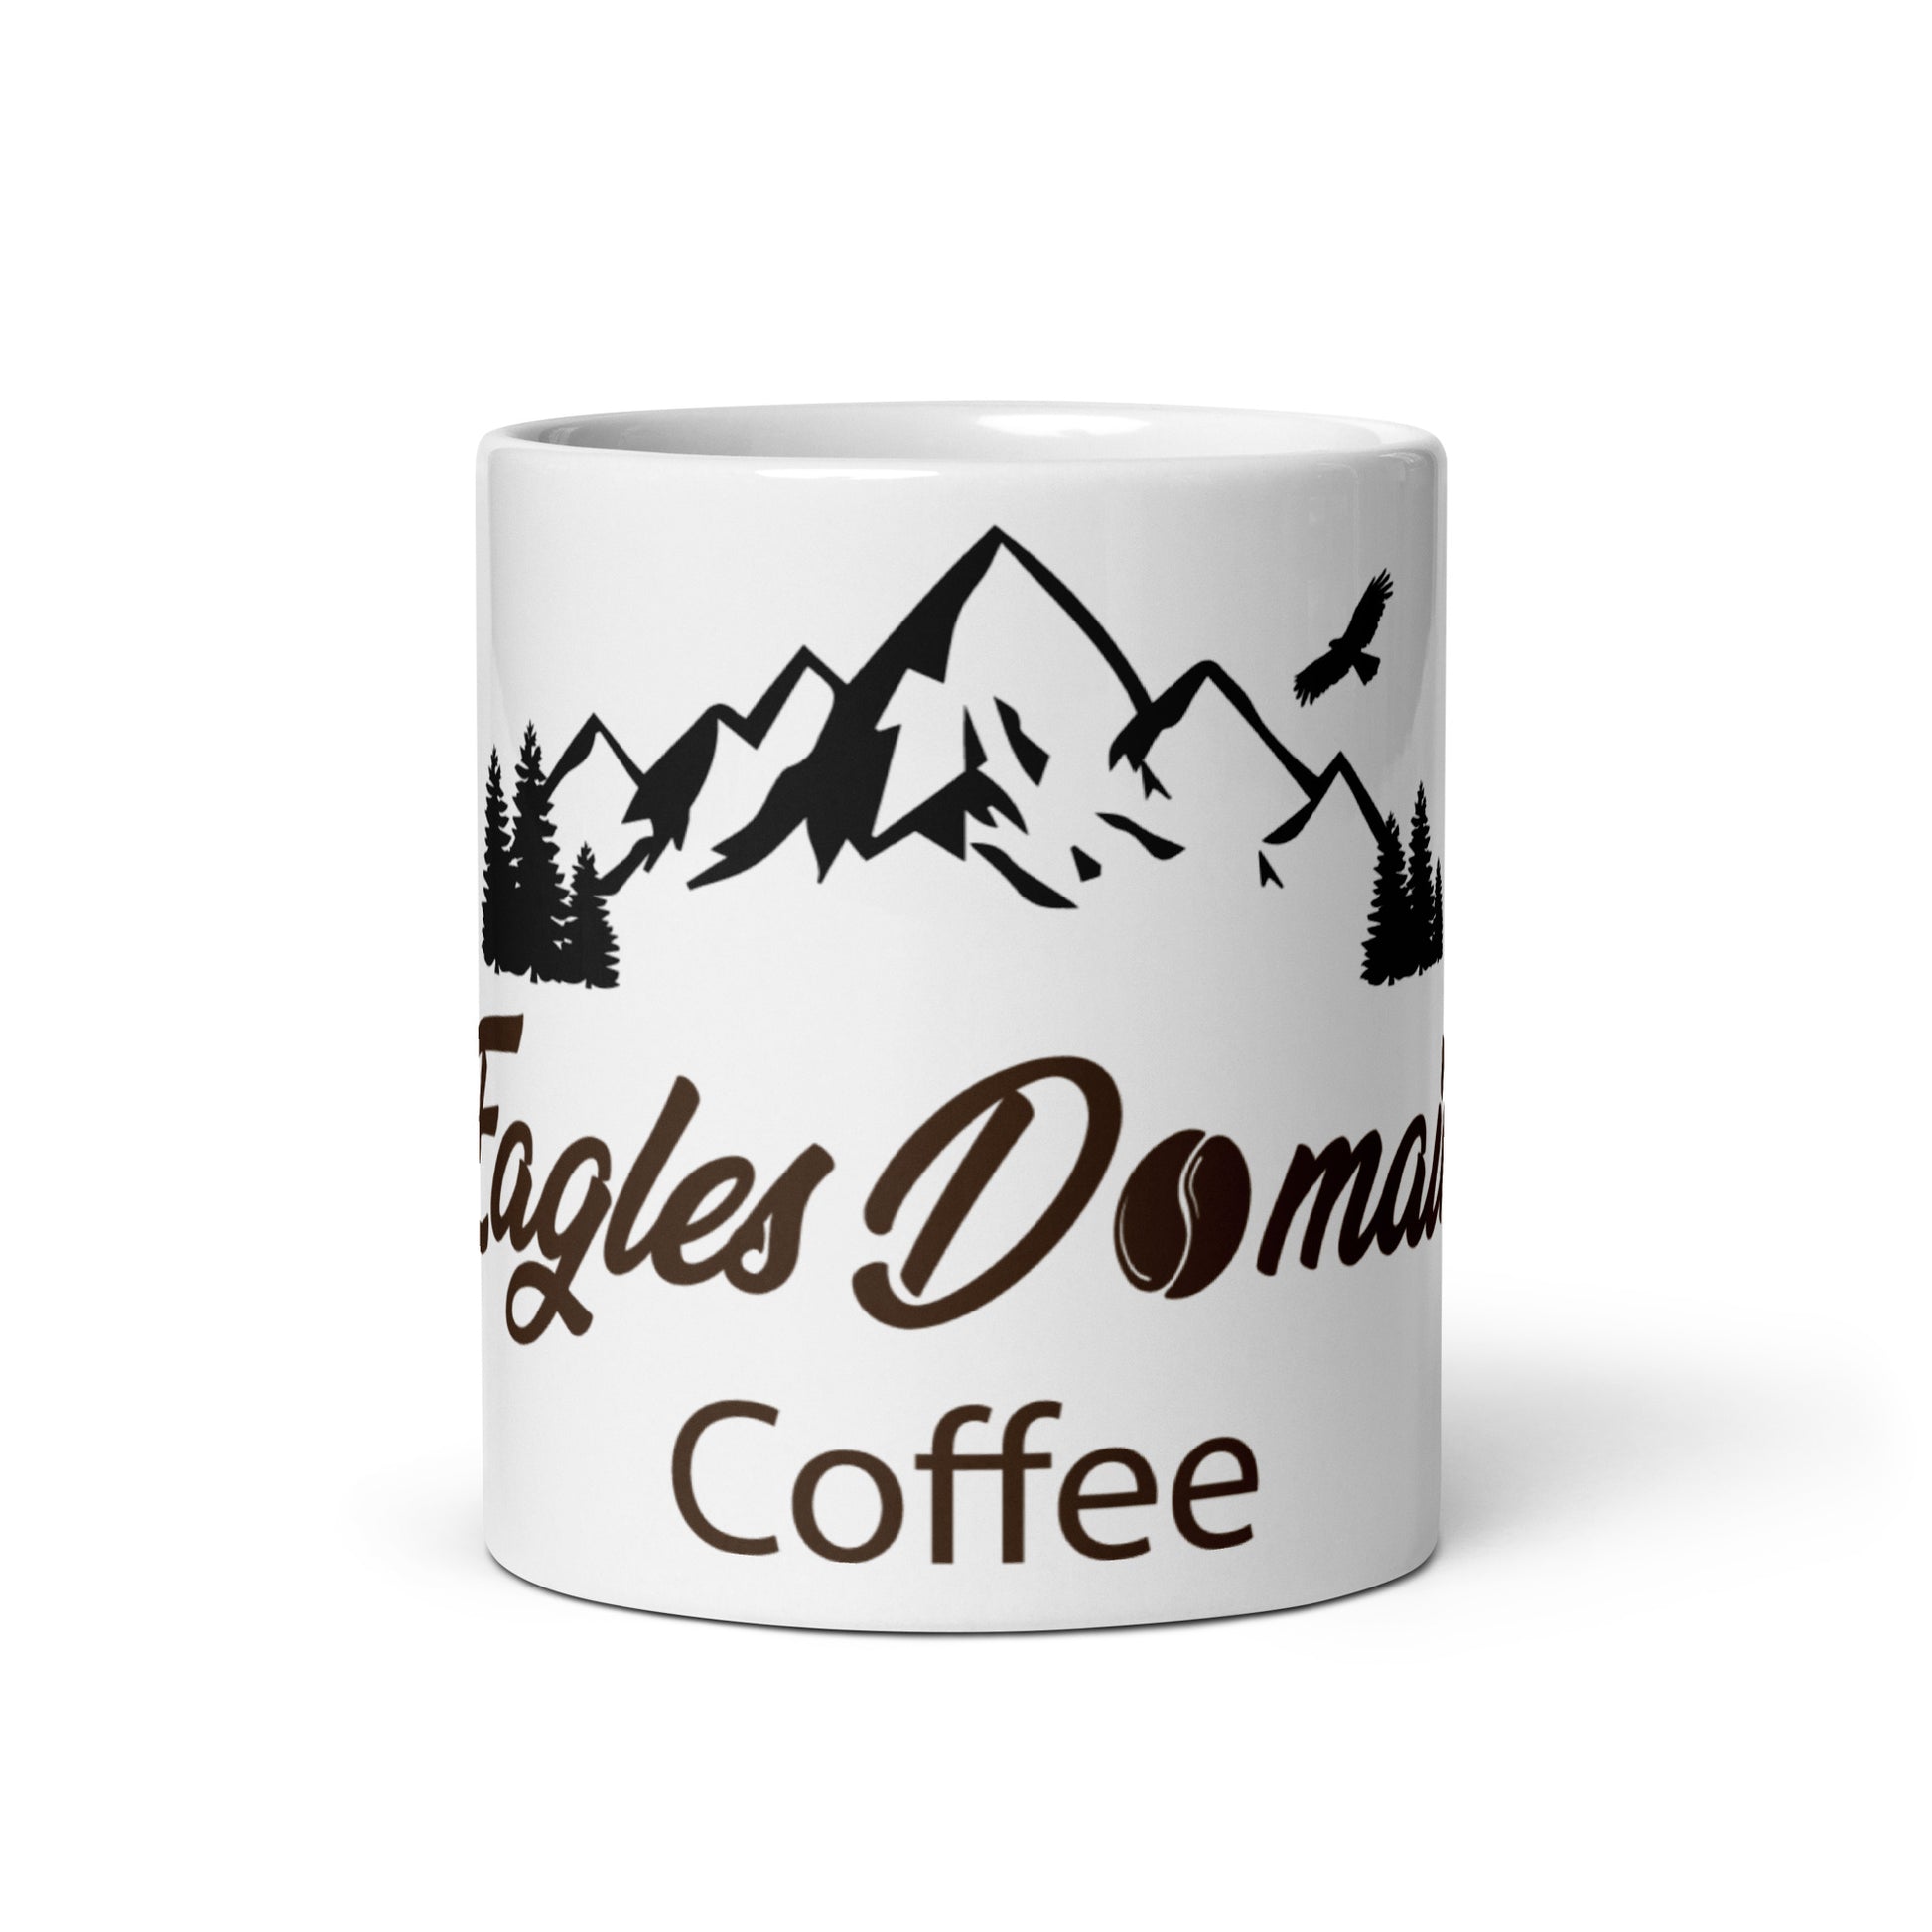 Eagles Domain Coffee White Glossy Mug - Eagles Domain Coffee